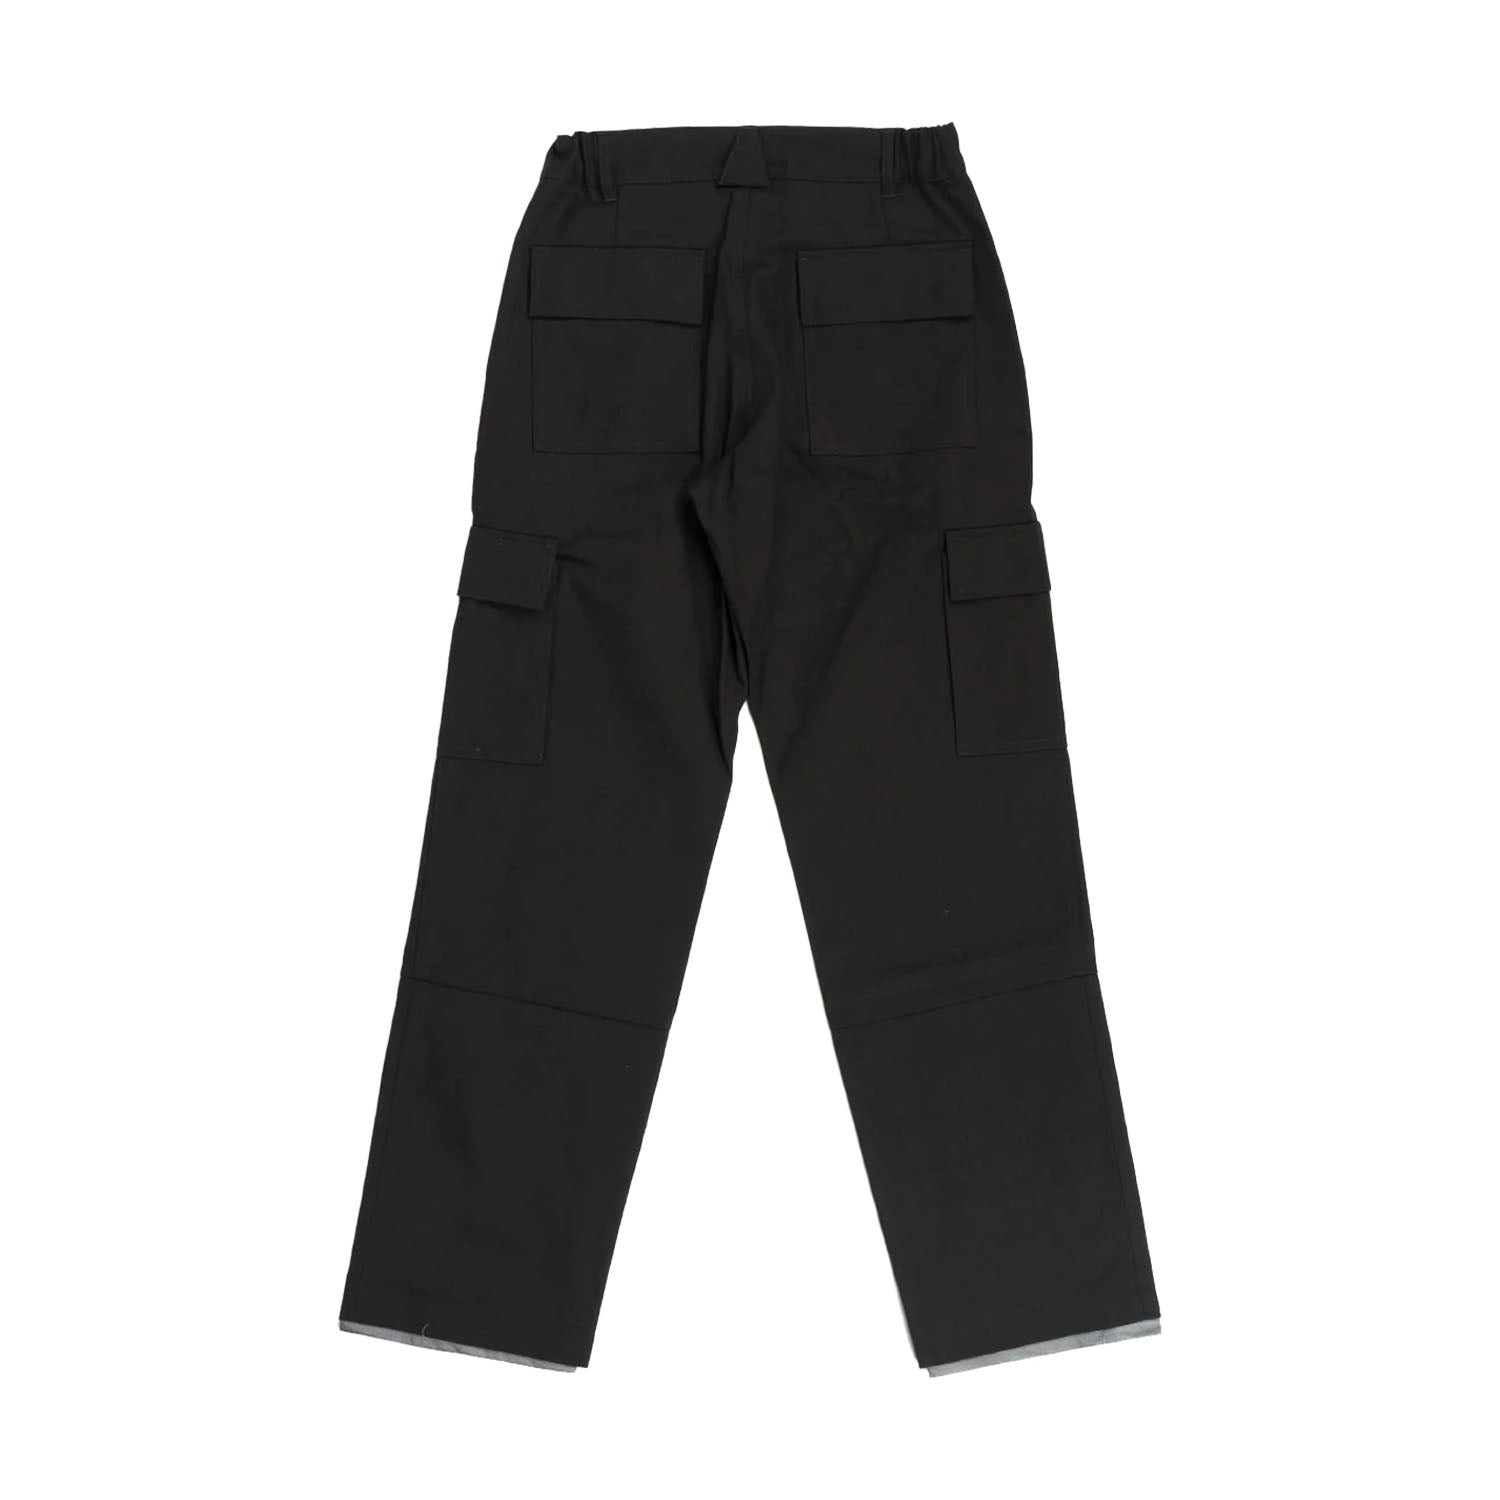 Klopman Shank Structured Pants (Black)